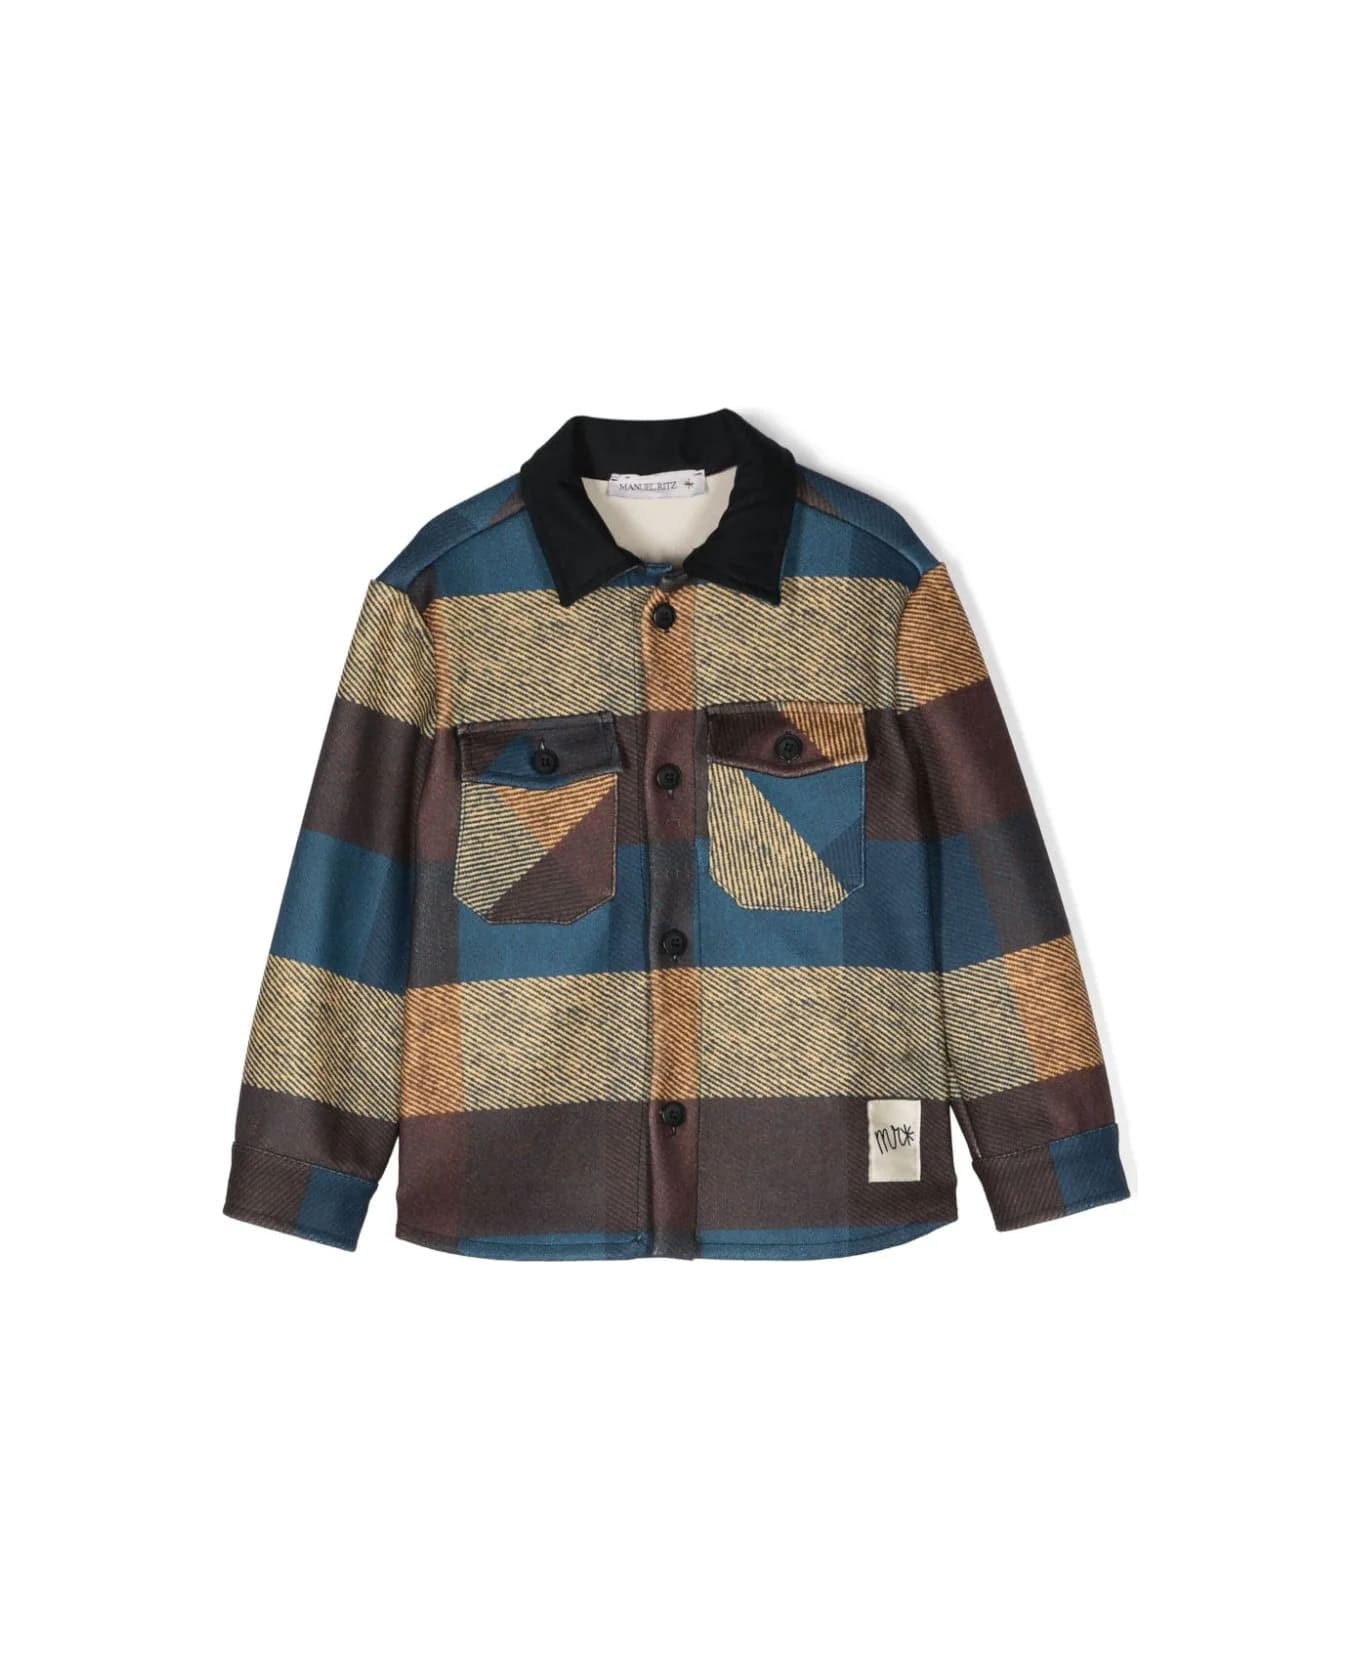 Manuel Ritz Shirt Jacket With Color-block Design - Variante unica